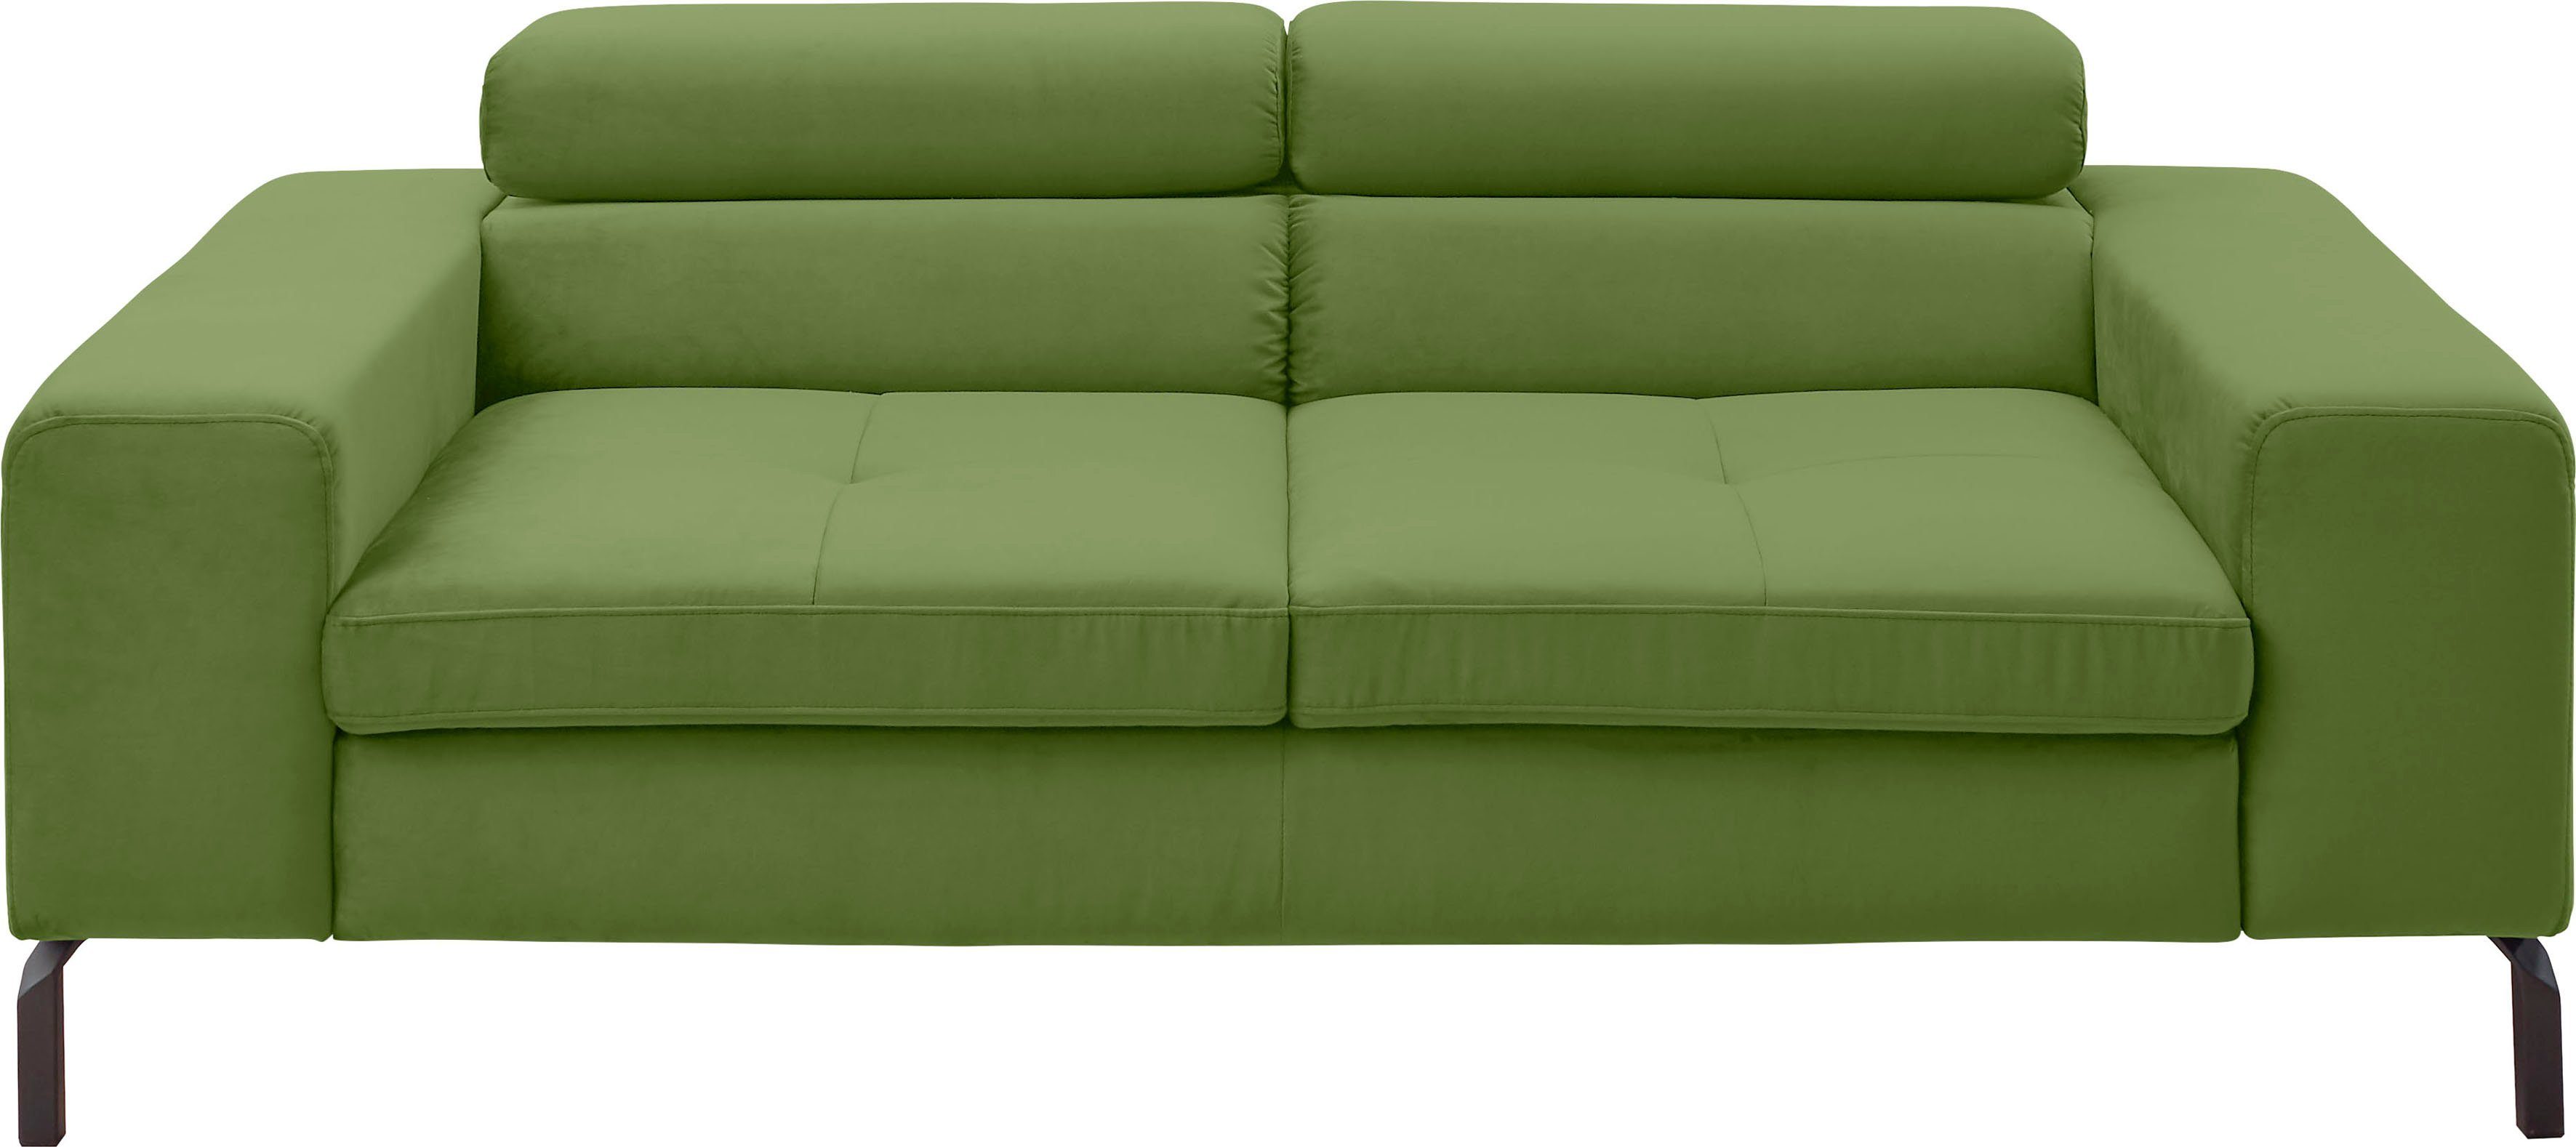 GALLERY M inklusive by Due, Felicia Kopfteilverstellung branded Musterring Wahlweise mit green Sitzvorzug, 2-Sitzer